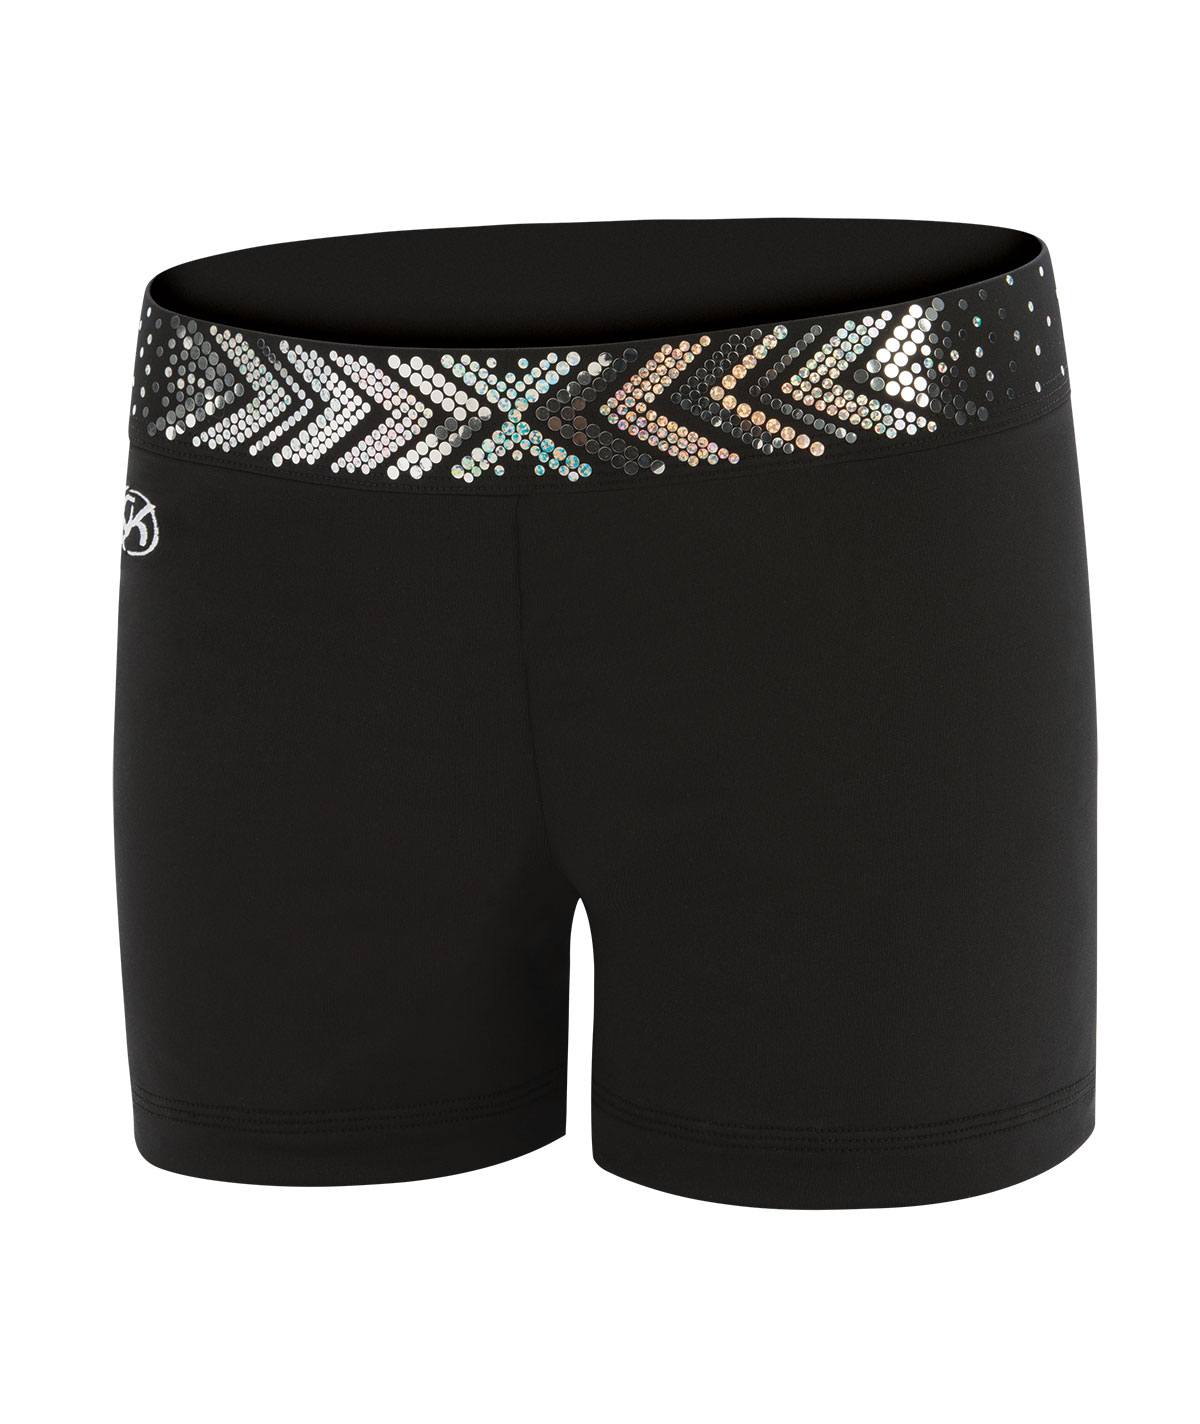 Omni Cheer - Black Cheer Shorts with Silver Spanglez Waistband